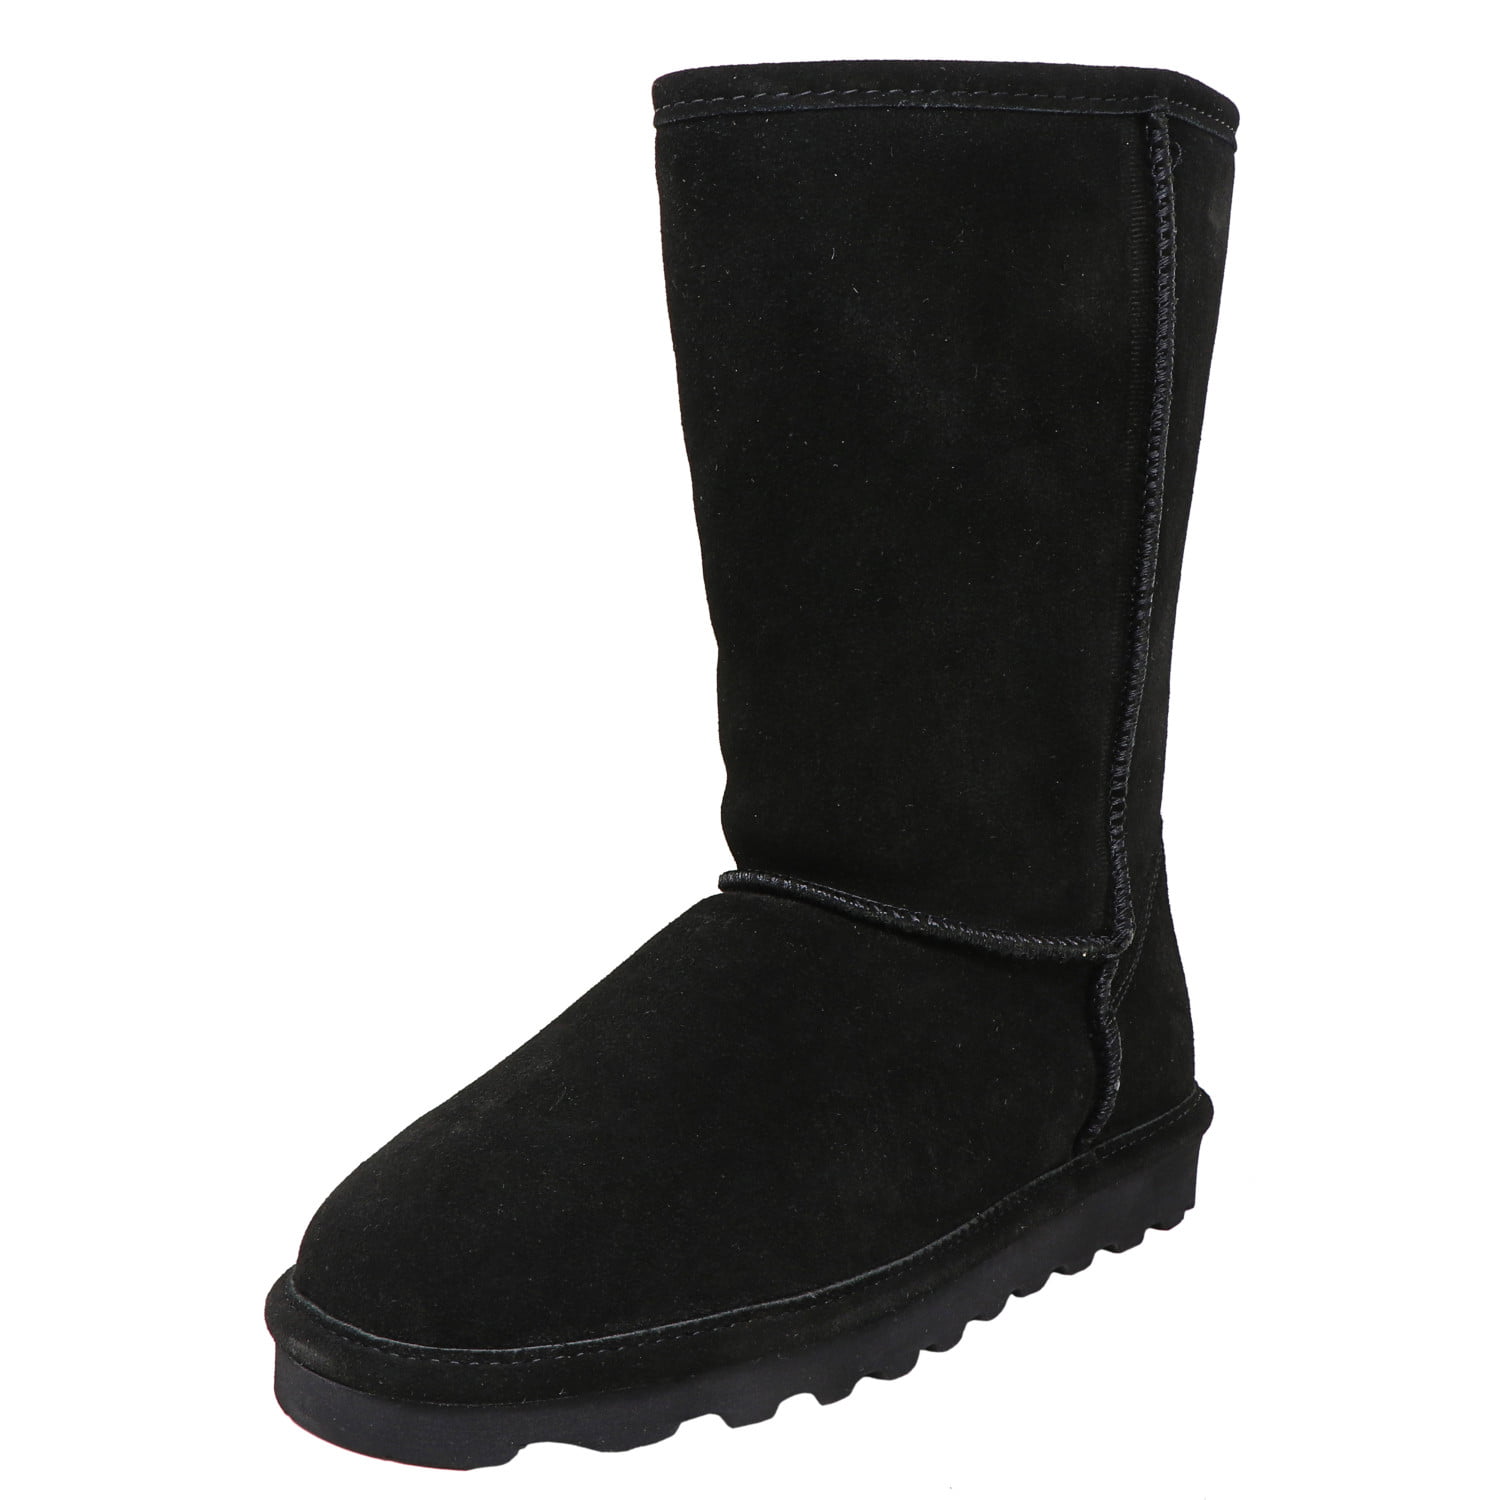 Bearpaw - Bearpaw Elle Tall Black Ii Mid-Calf Leather Snow Boot - 6M ...